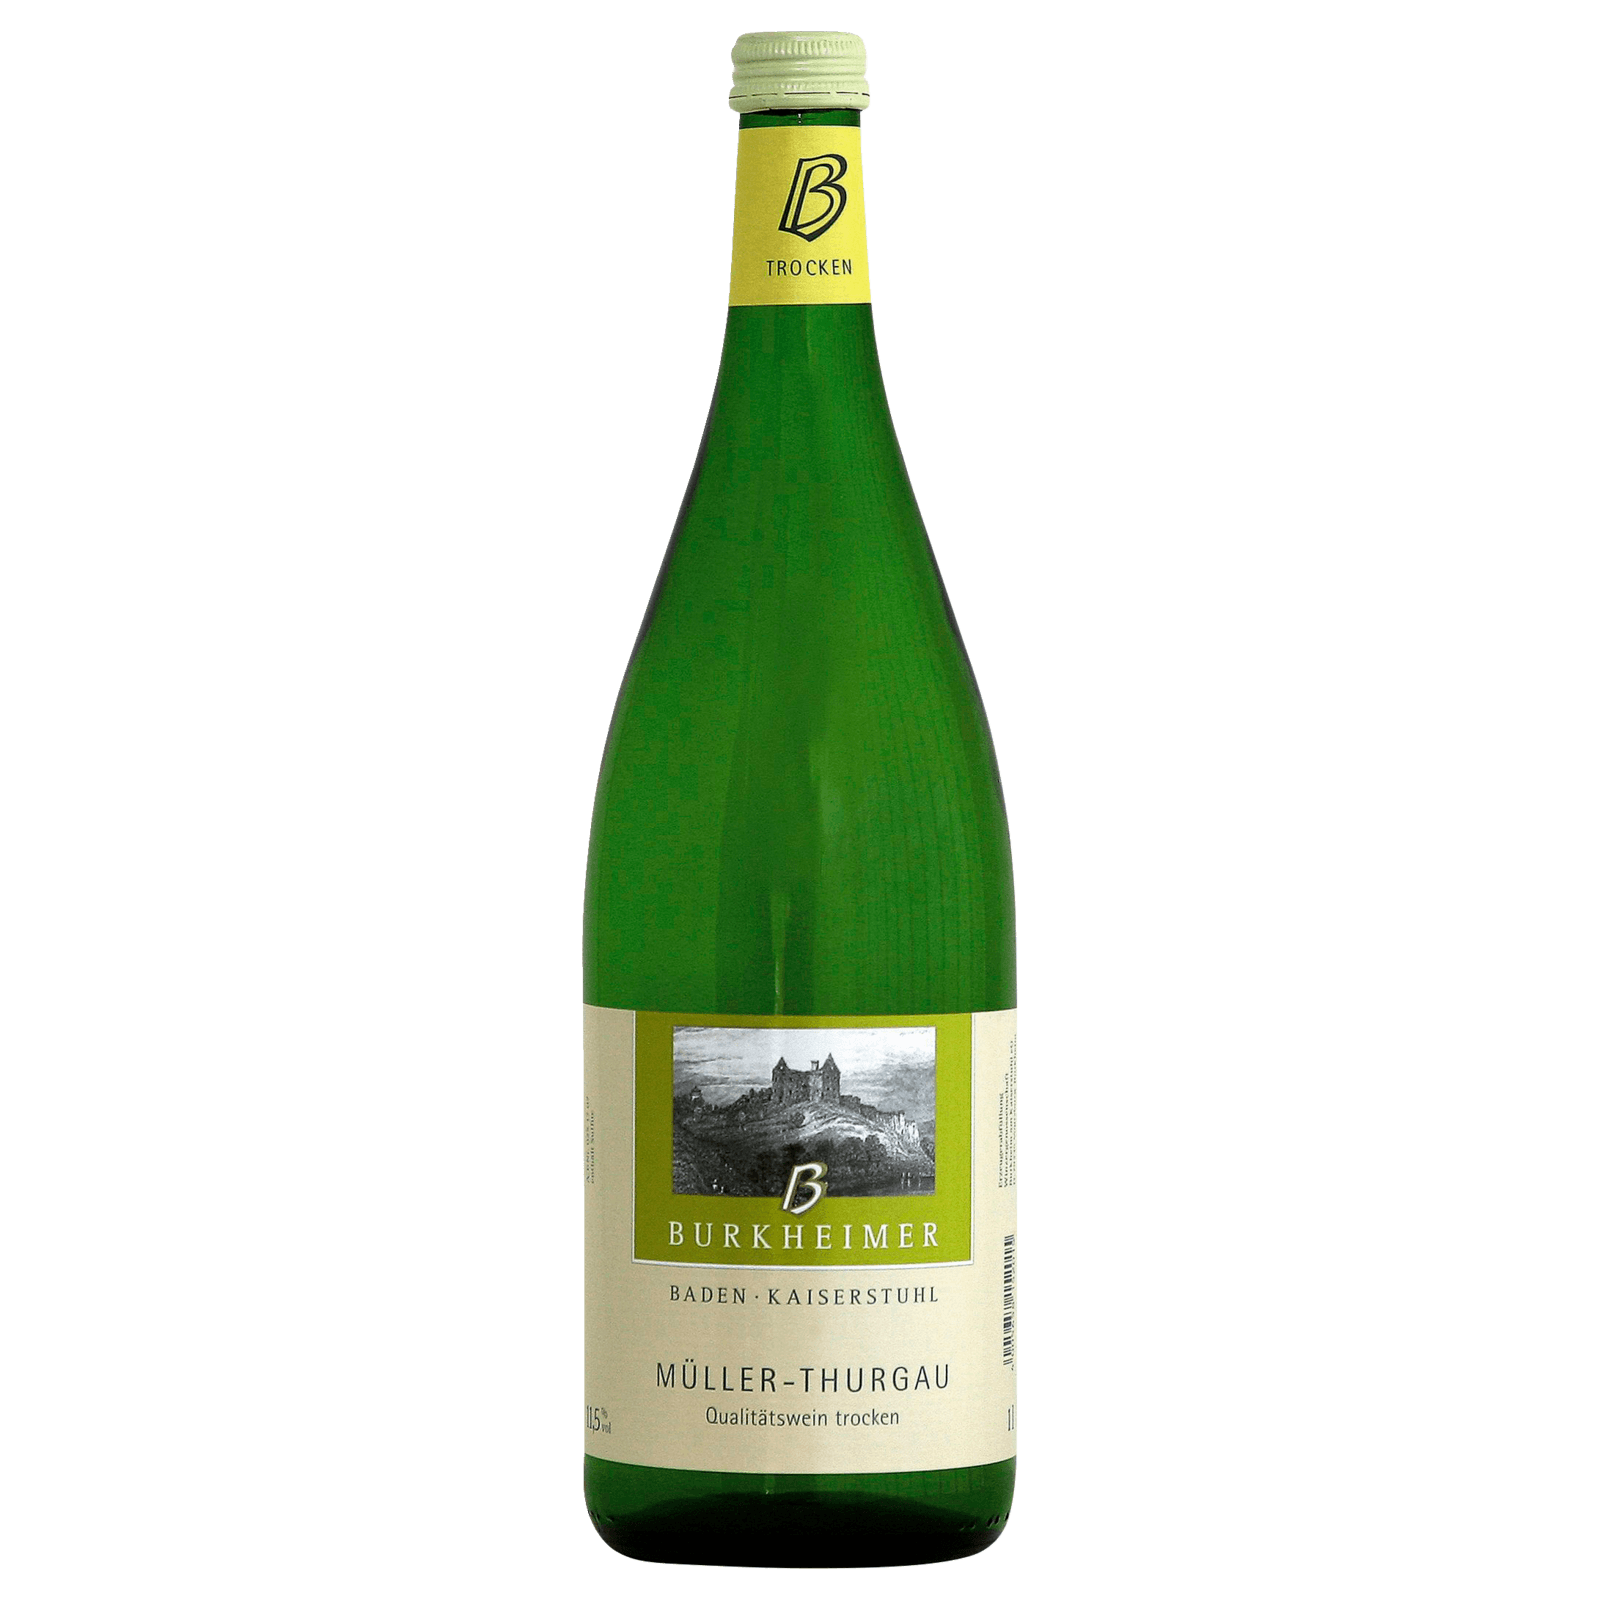 trocken 1l online Weißwein bei QbA bestellen! Burkheimer REWE Müller-Thurgau